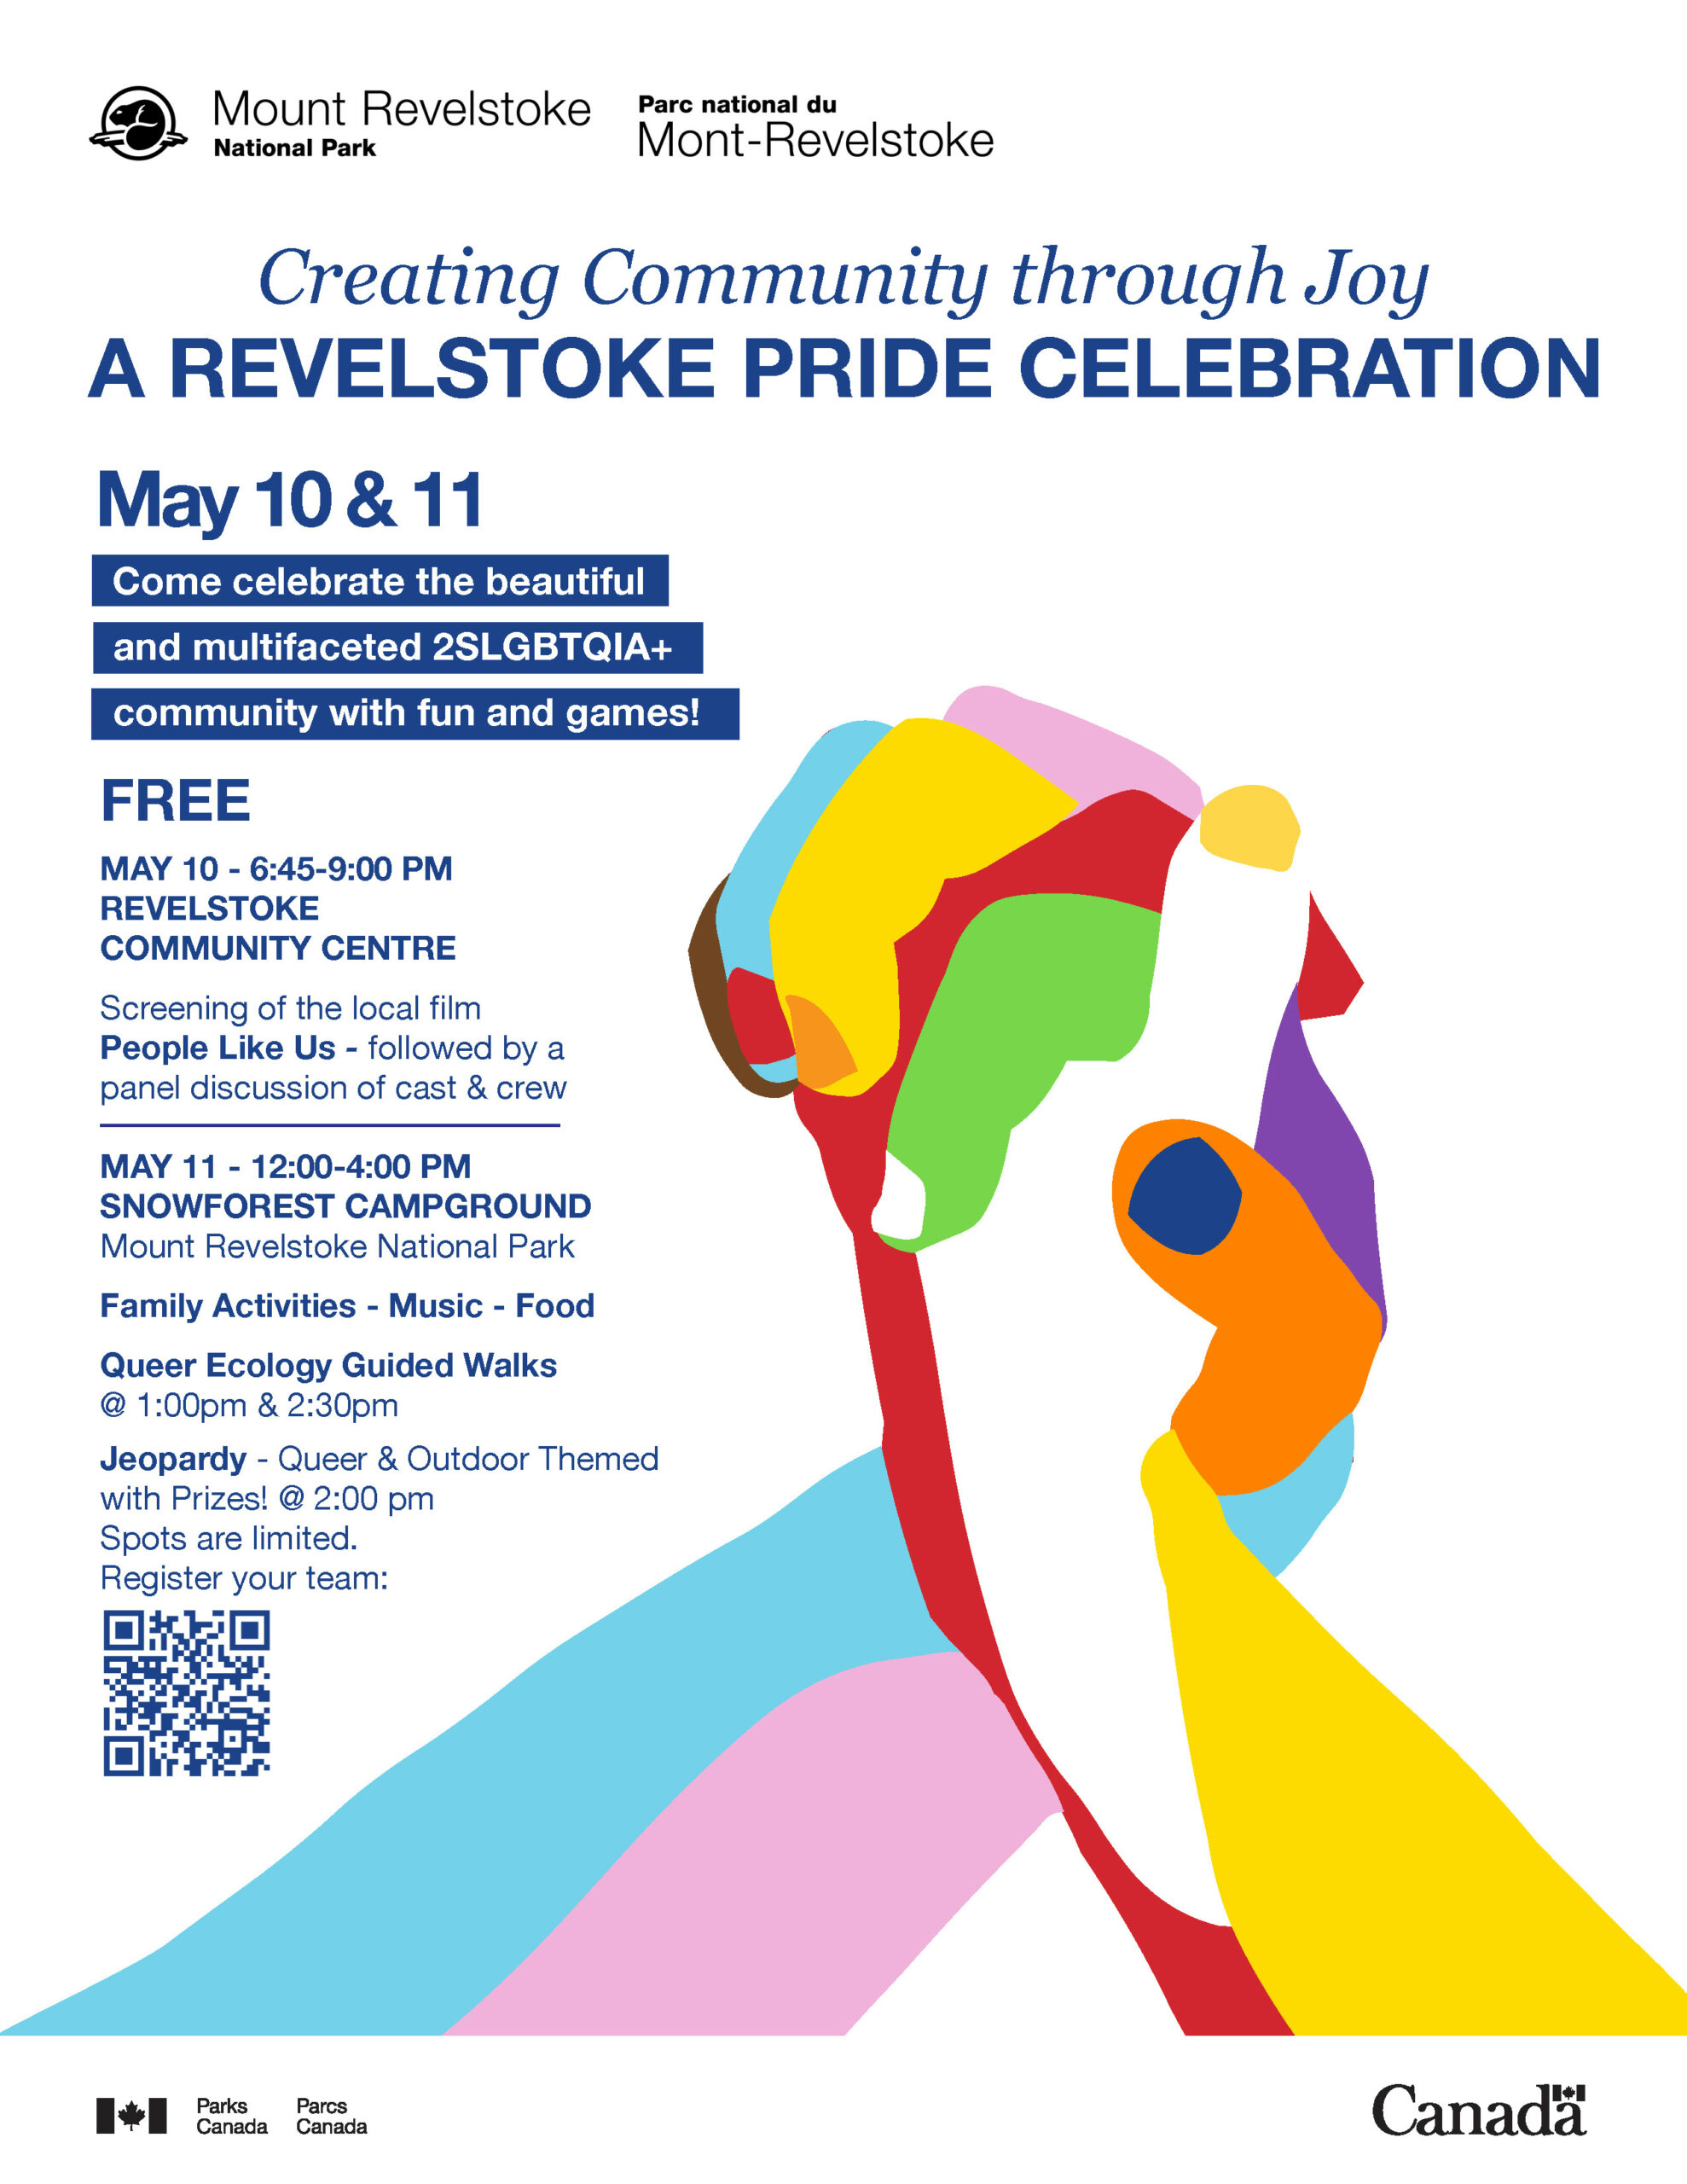 A Revelstoke Pride Celebration